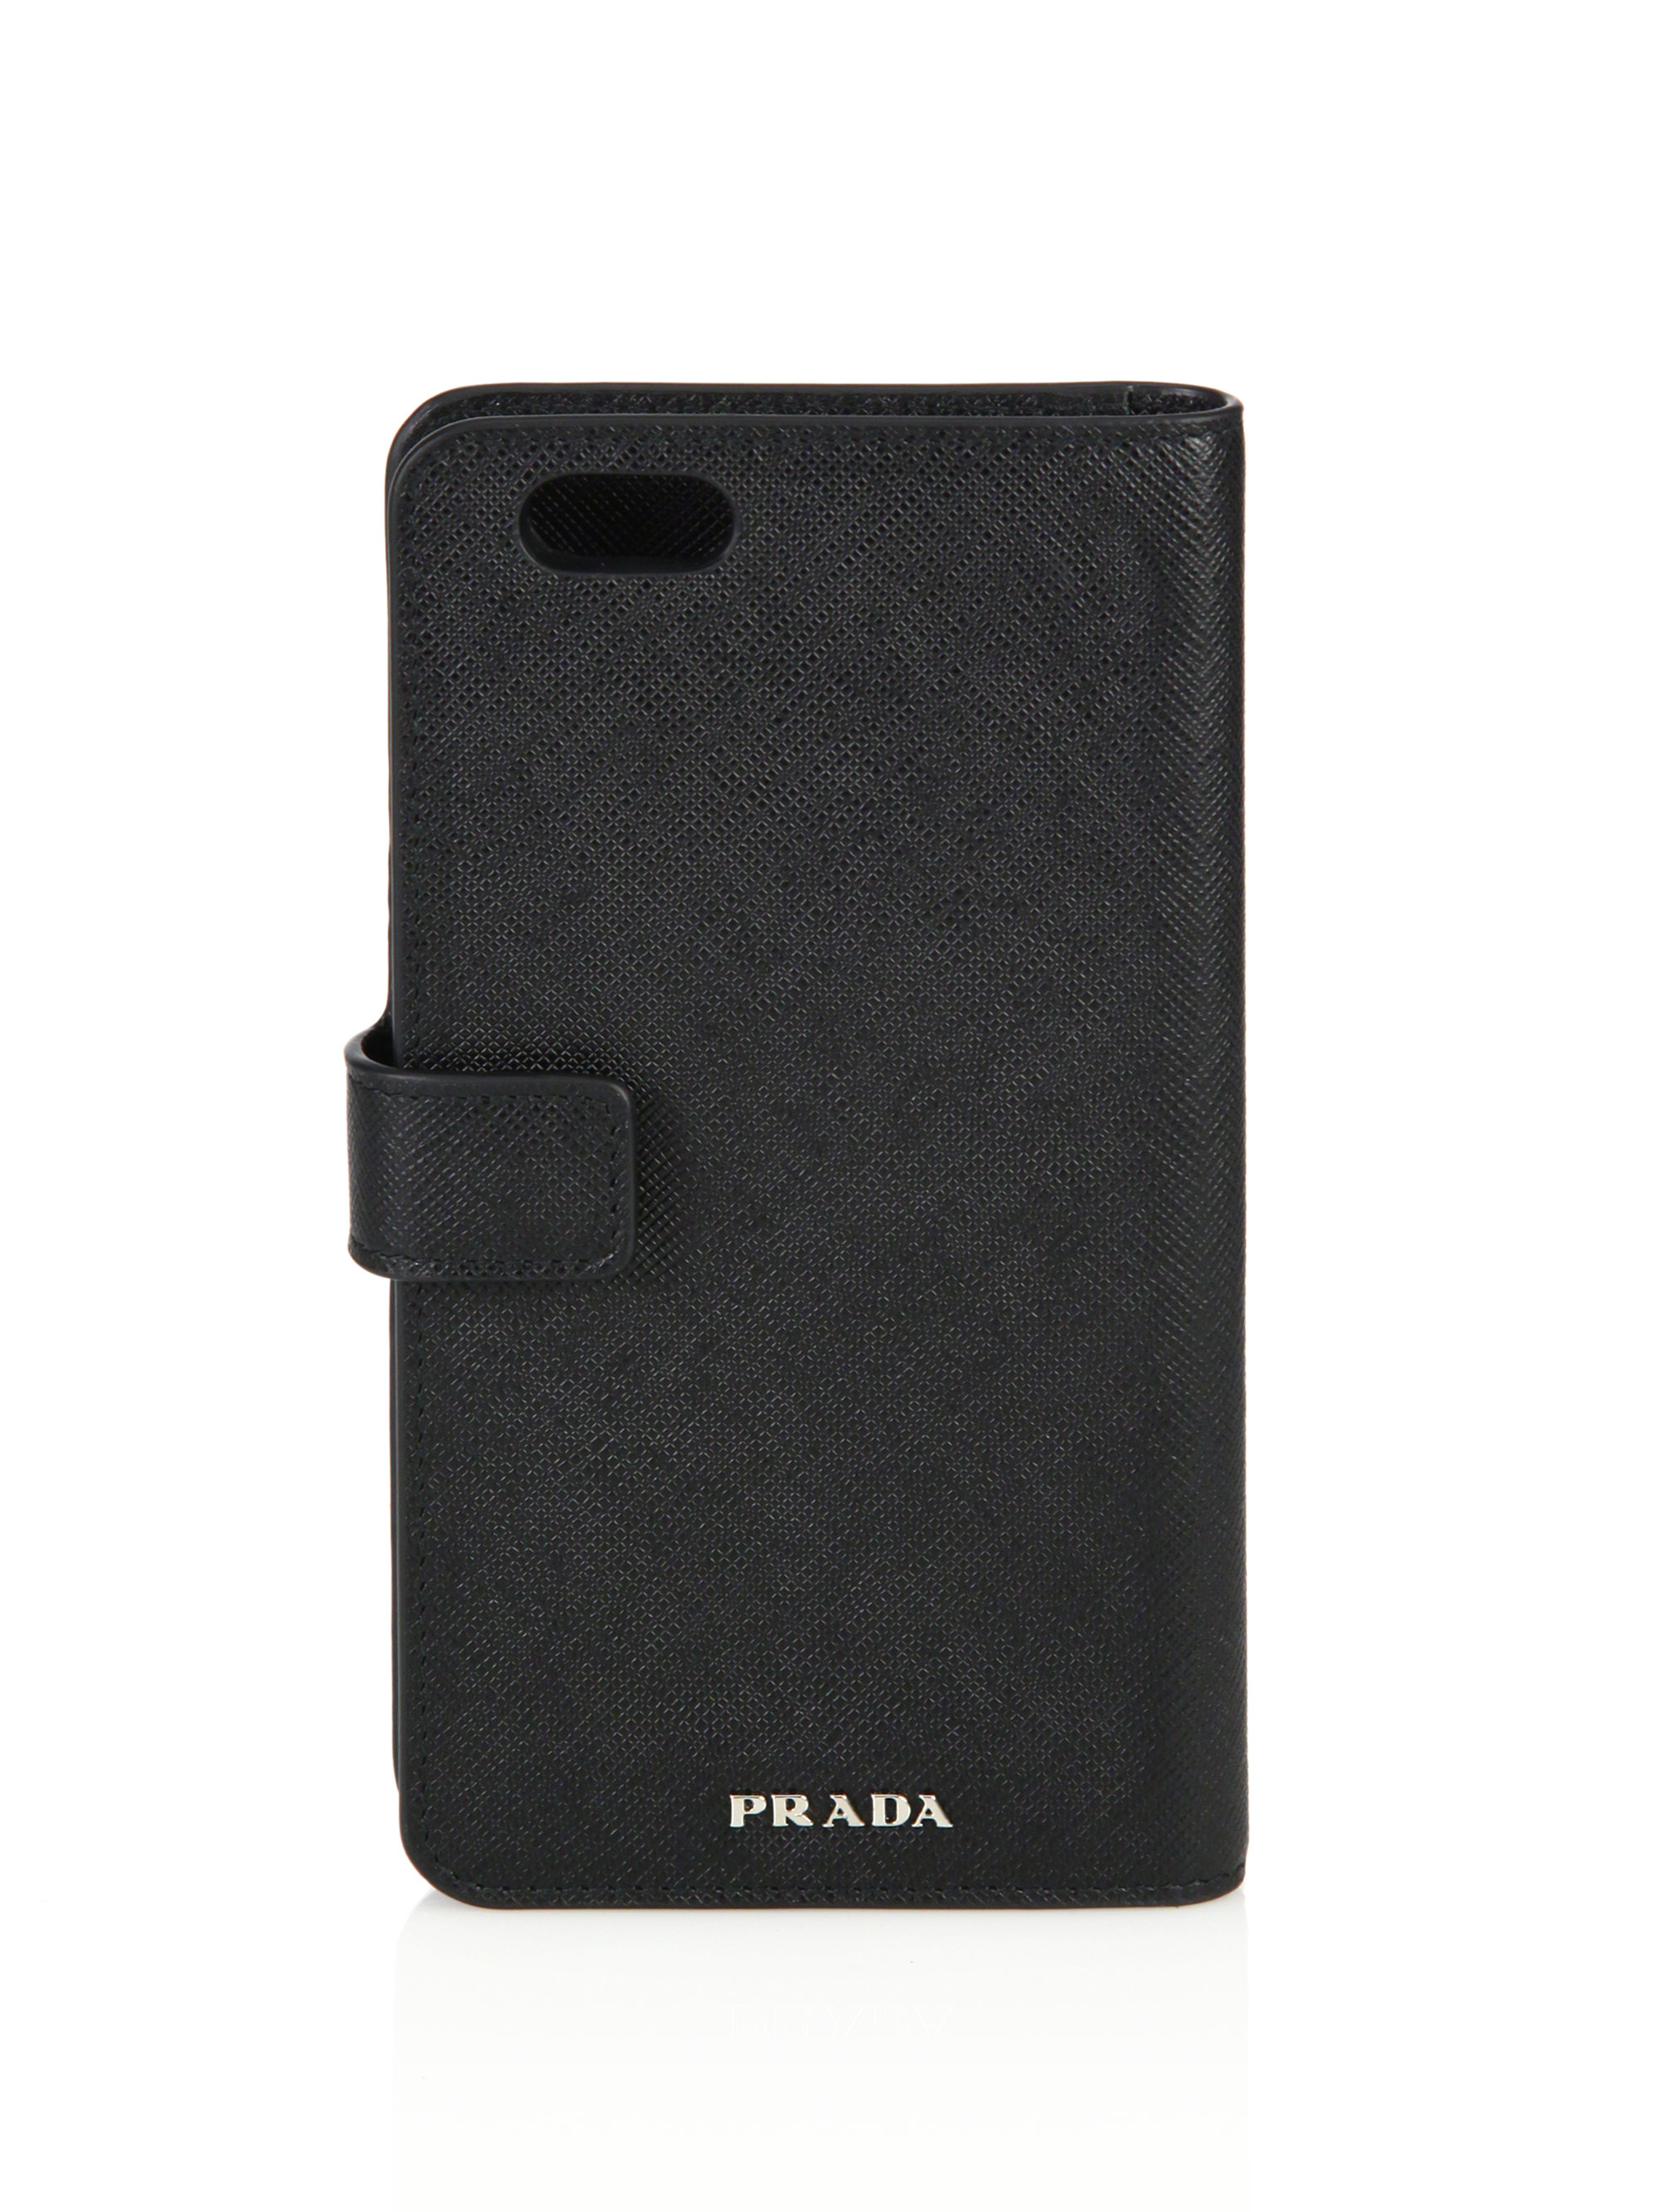 prada iphone 8 wallet case, OFF 74%,www 